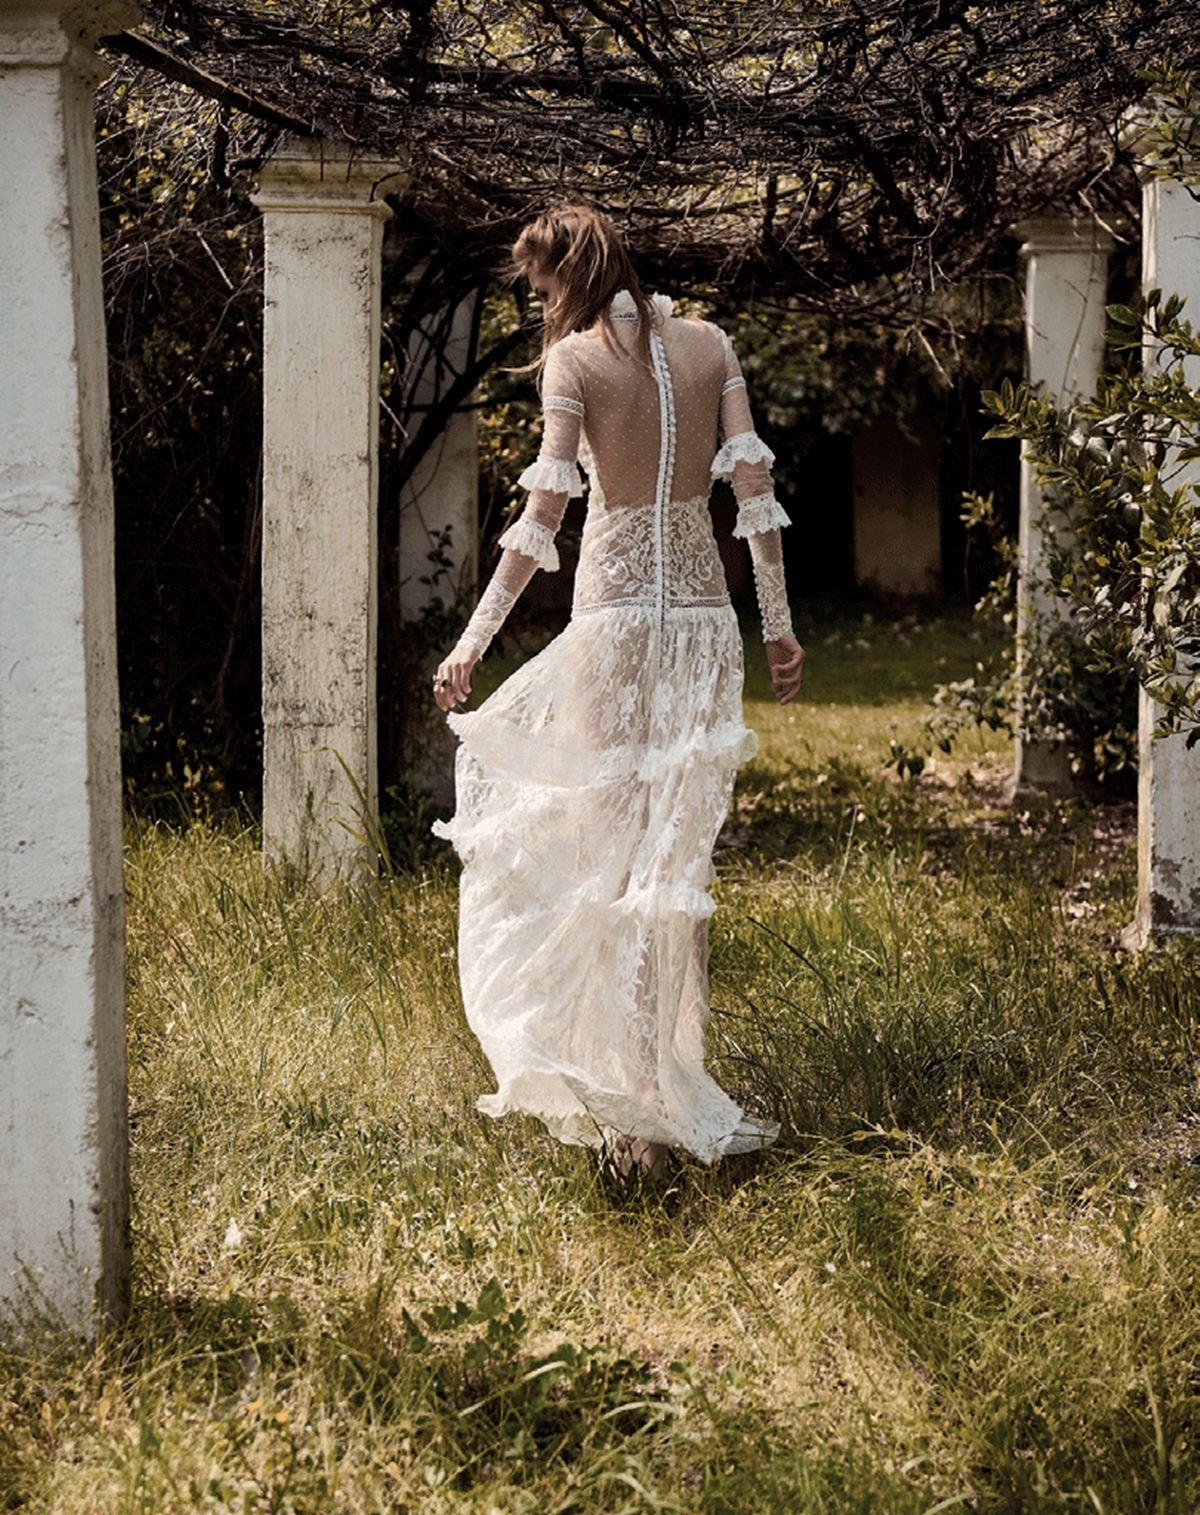 Boho wedding dress with ruffles and transparencies Christos Costarellos 2018